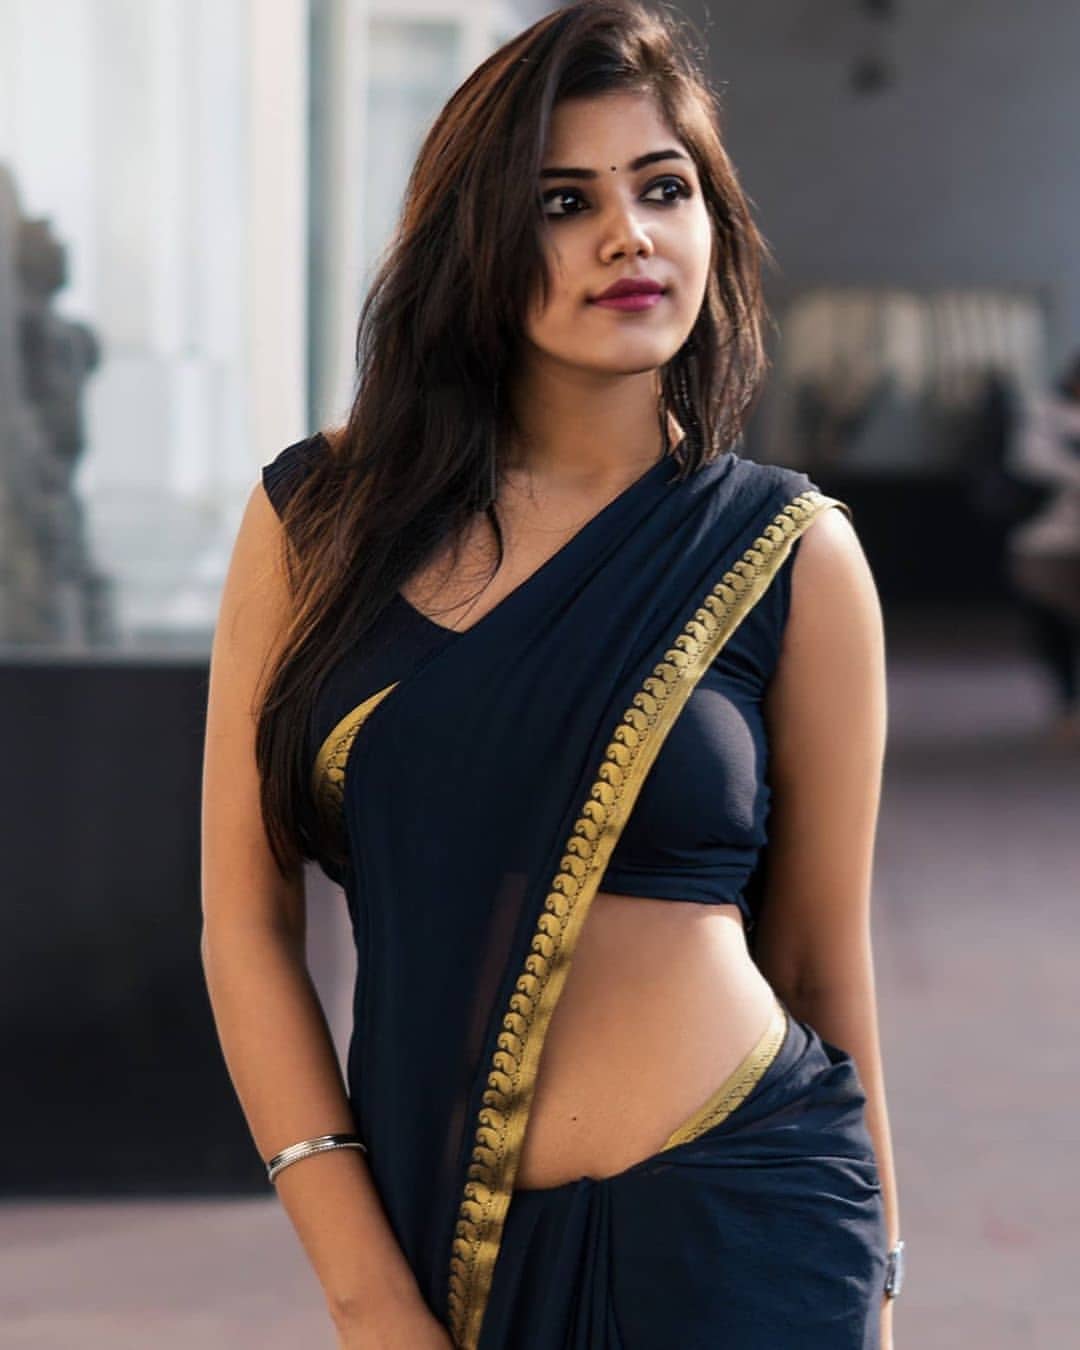 Super Hot Indian Girls In Beautiful Saree Wow 350 